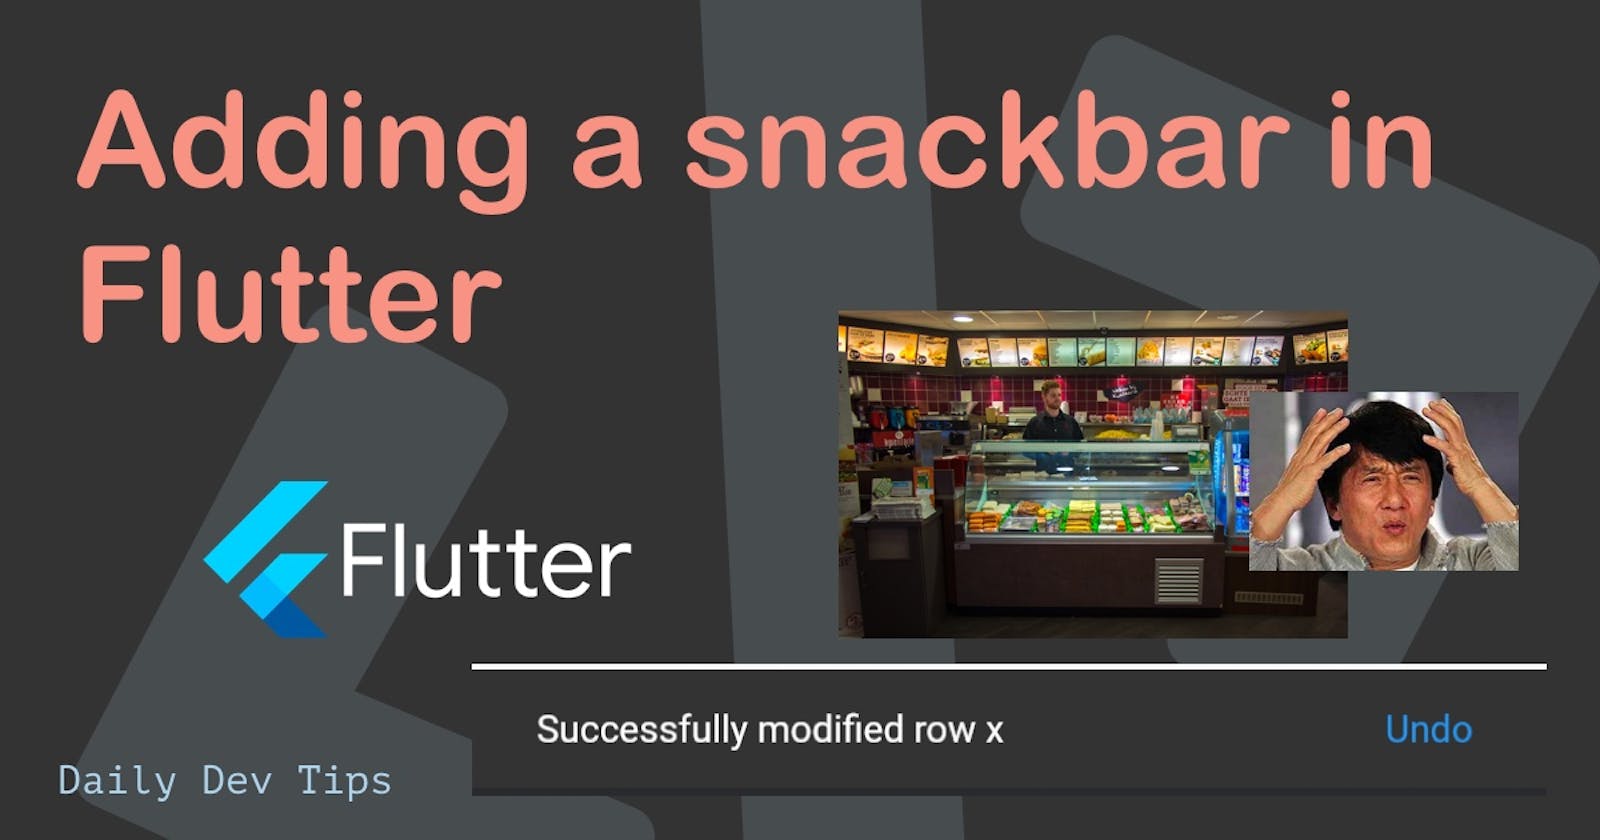 Adding a snackbar in Flutter